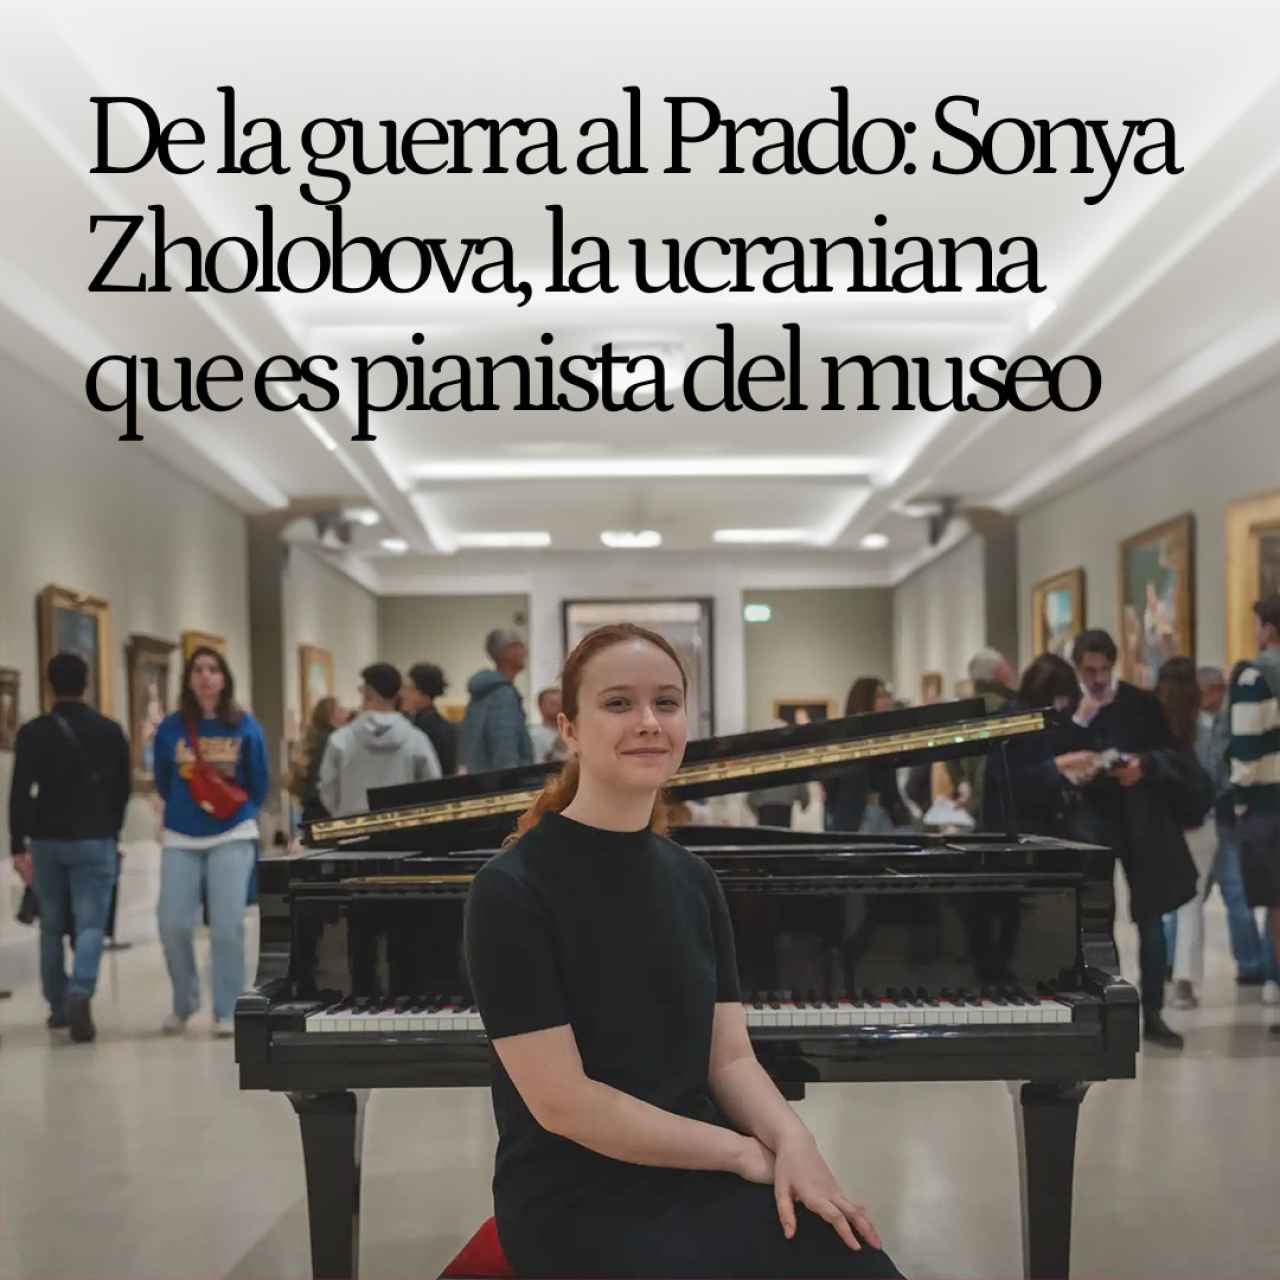 De la guerra al Prado: Sonya Zholobova, la ucraniana convertida en pianista del museo